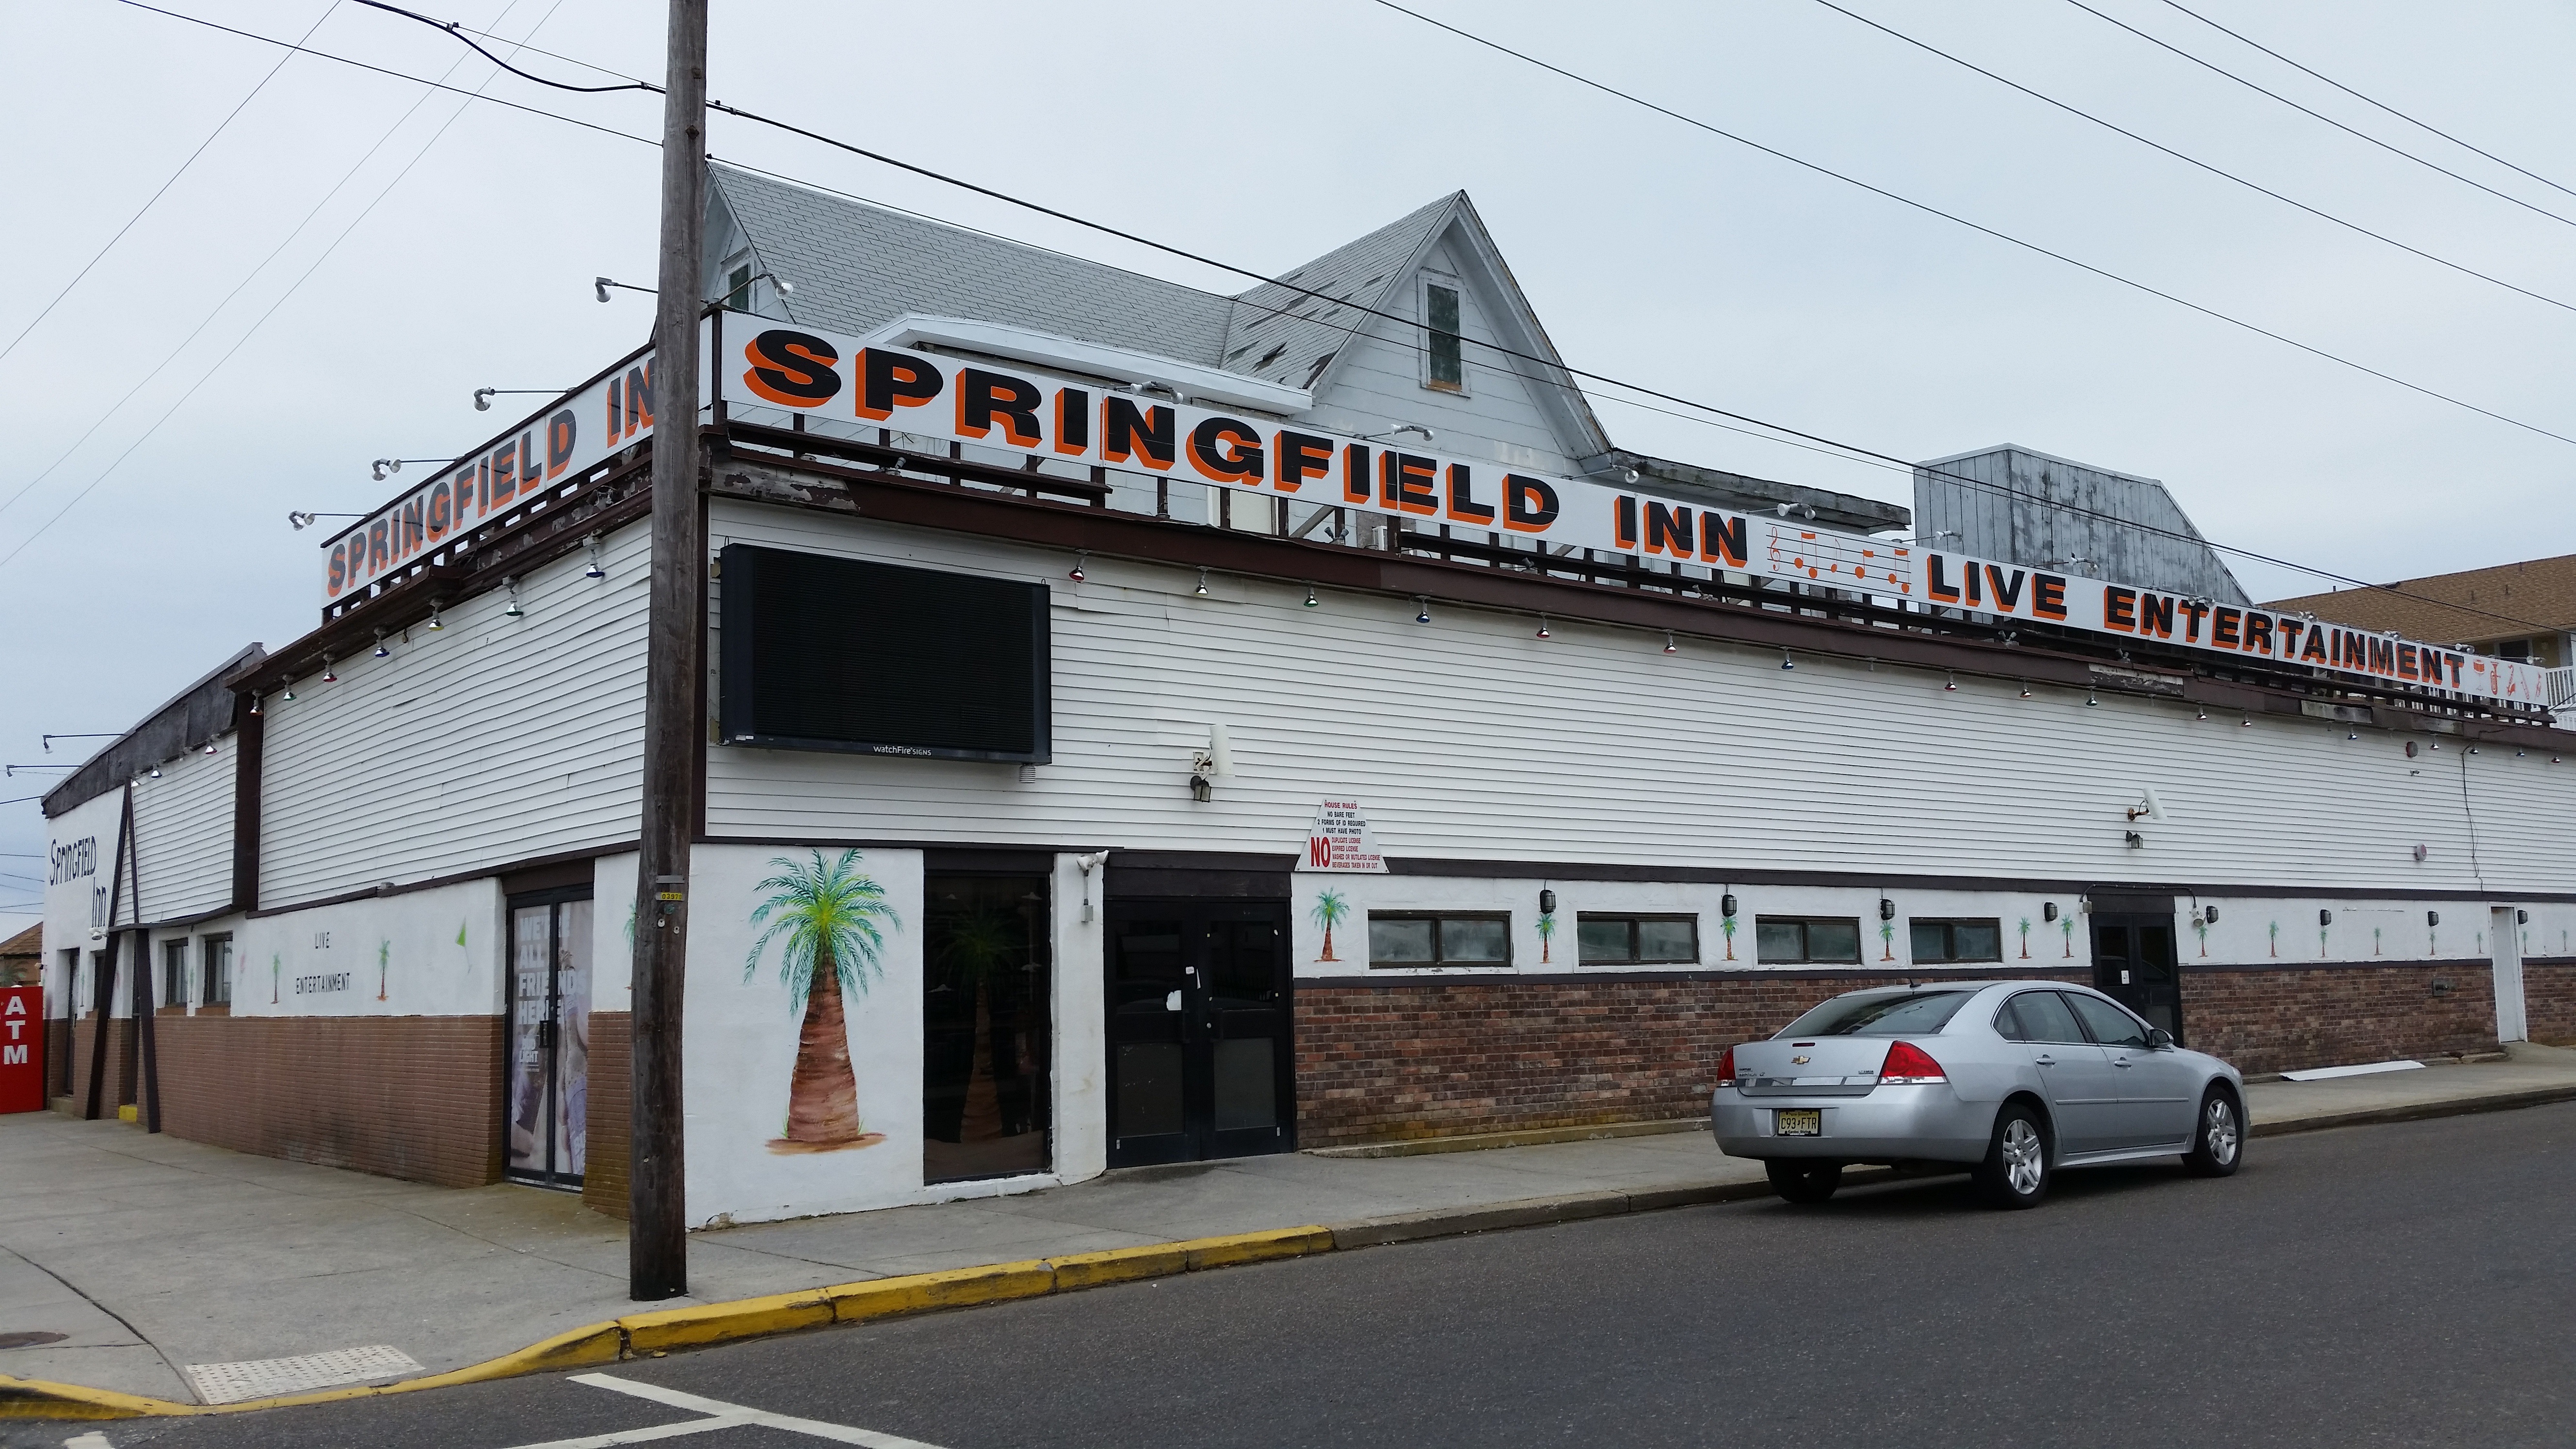 Last Call for Springfield Inn This 